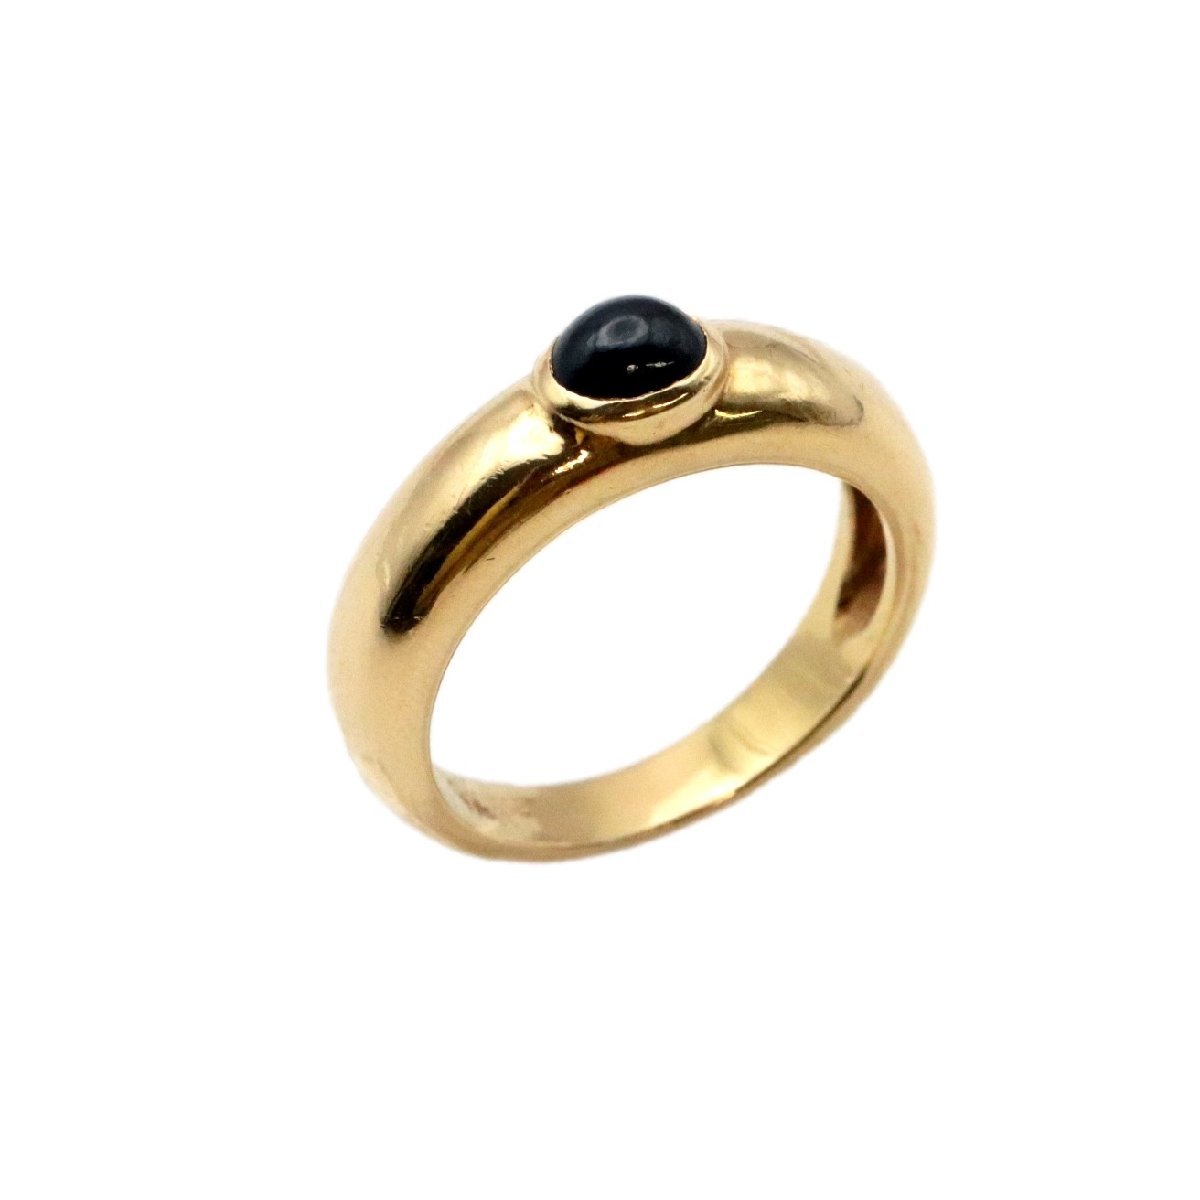  Chaumet ano- сапфир кольцо 10.5 номер K18YG желтое золото женский кольцо ювелирные изделия Chaumet